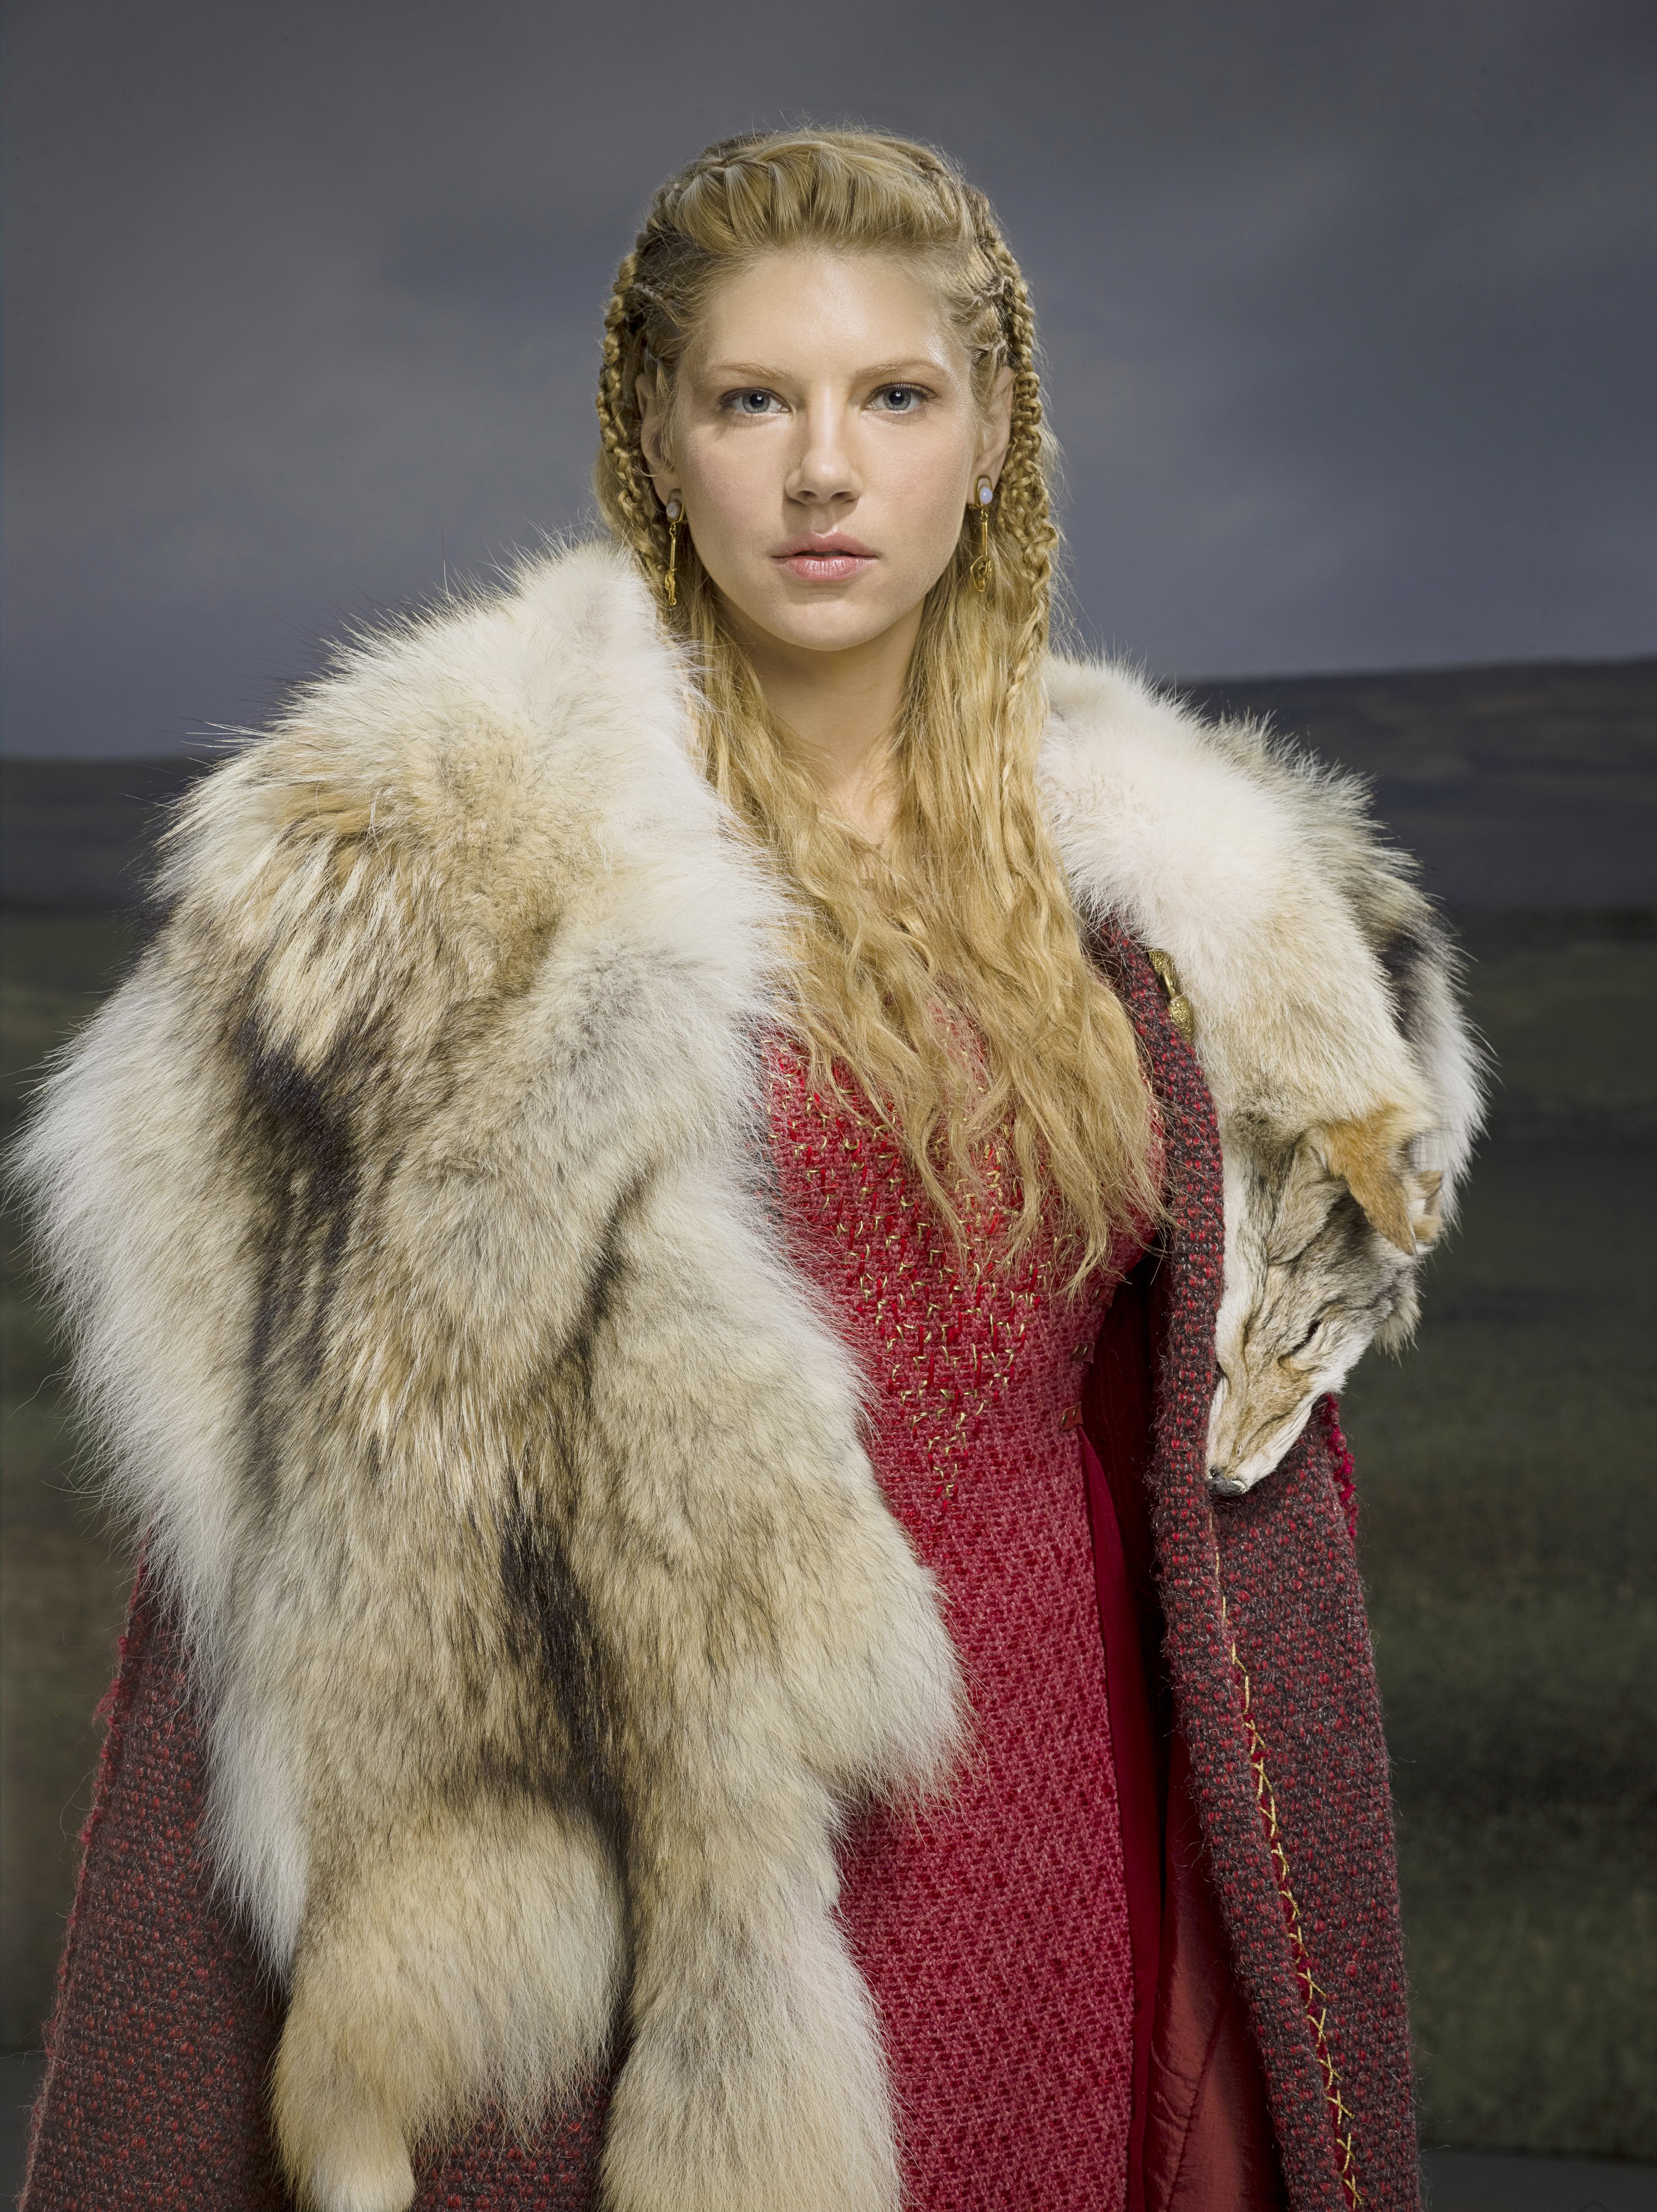 Vikings Season 2 Lagertha official picture - Vikings (TV Series) Photo